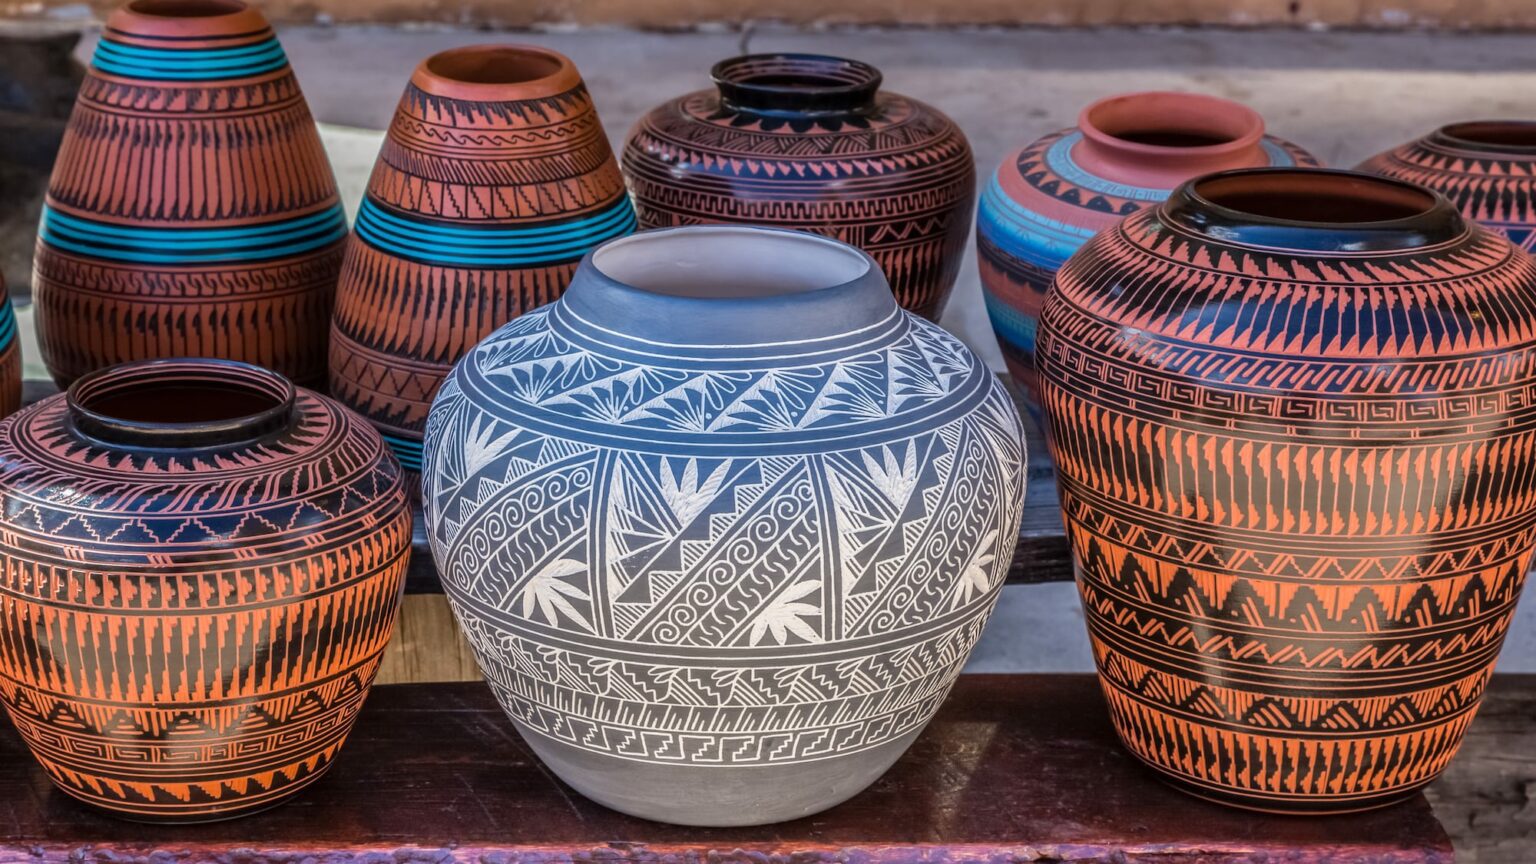 Native American clay pots in Santa Fe, New Mexico